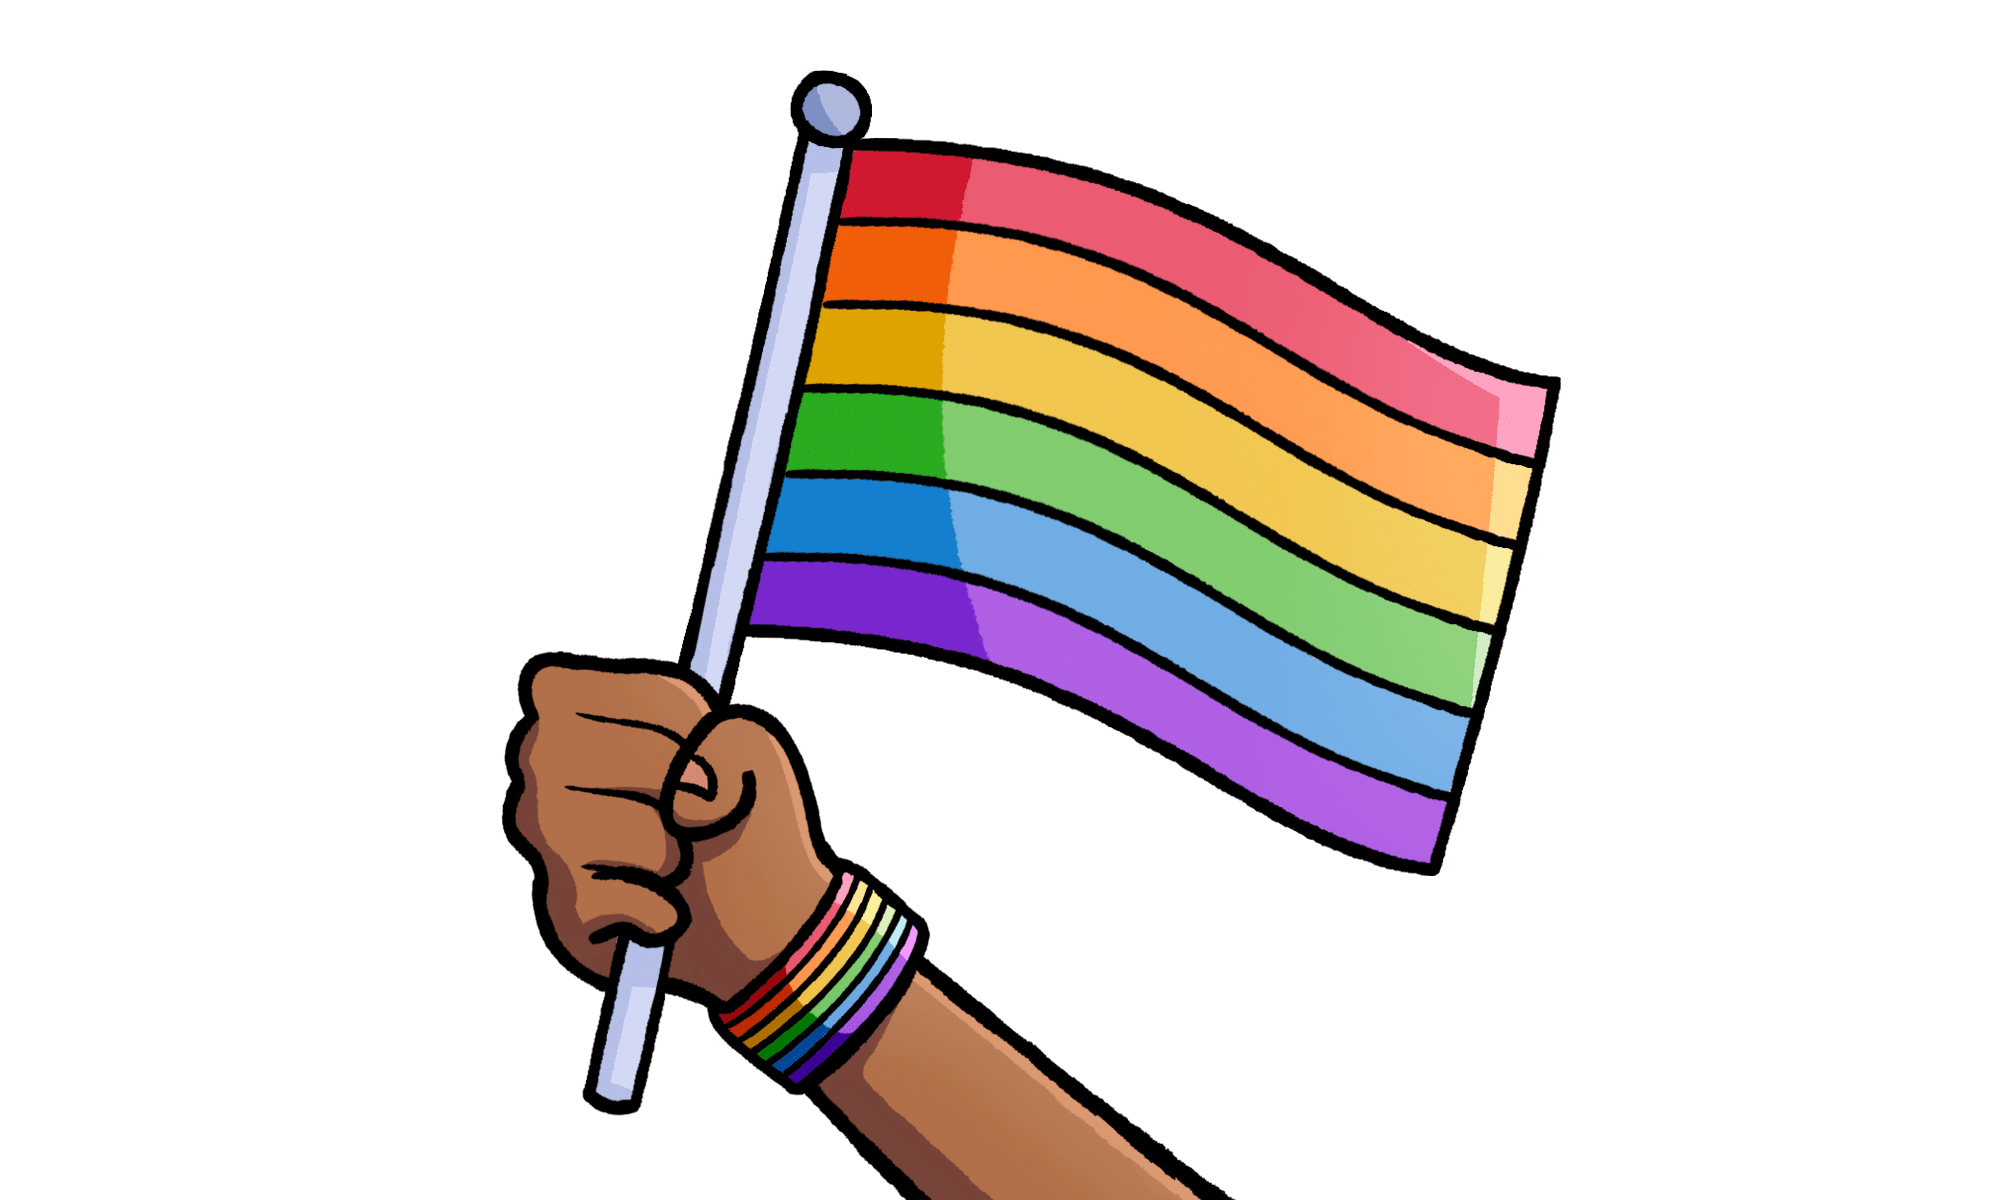 Graphics company with rainbow logo refuses to make rainbow logo for pro-gay church